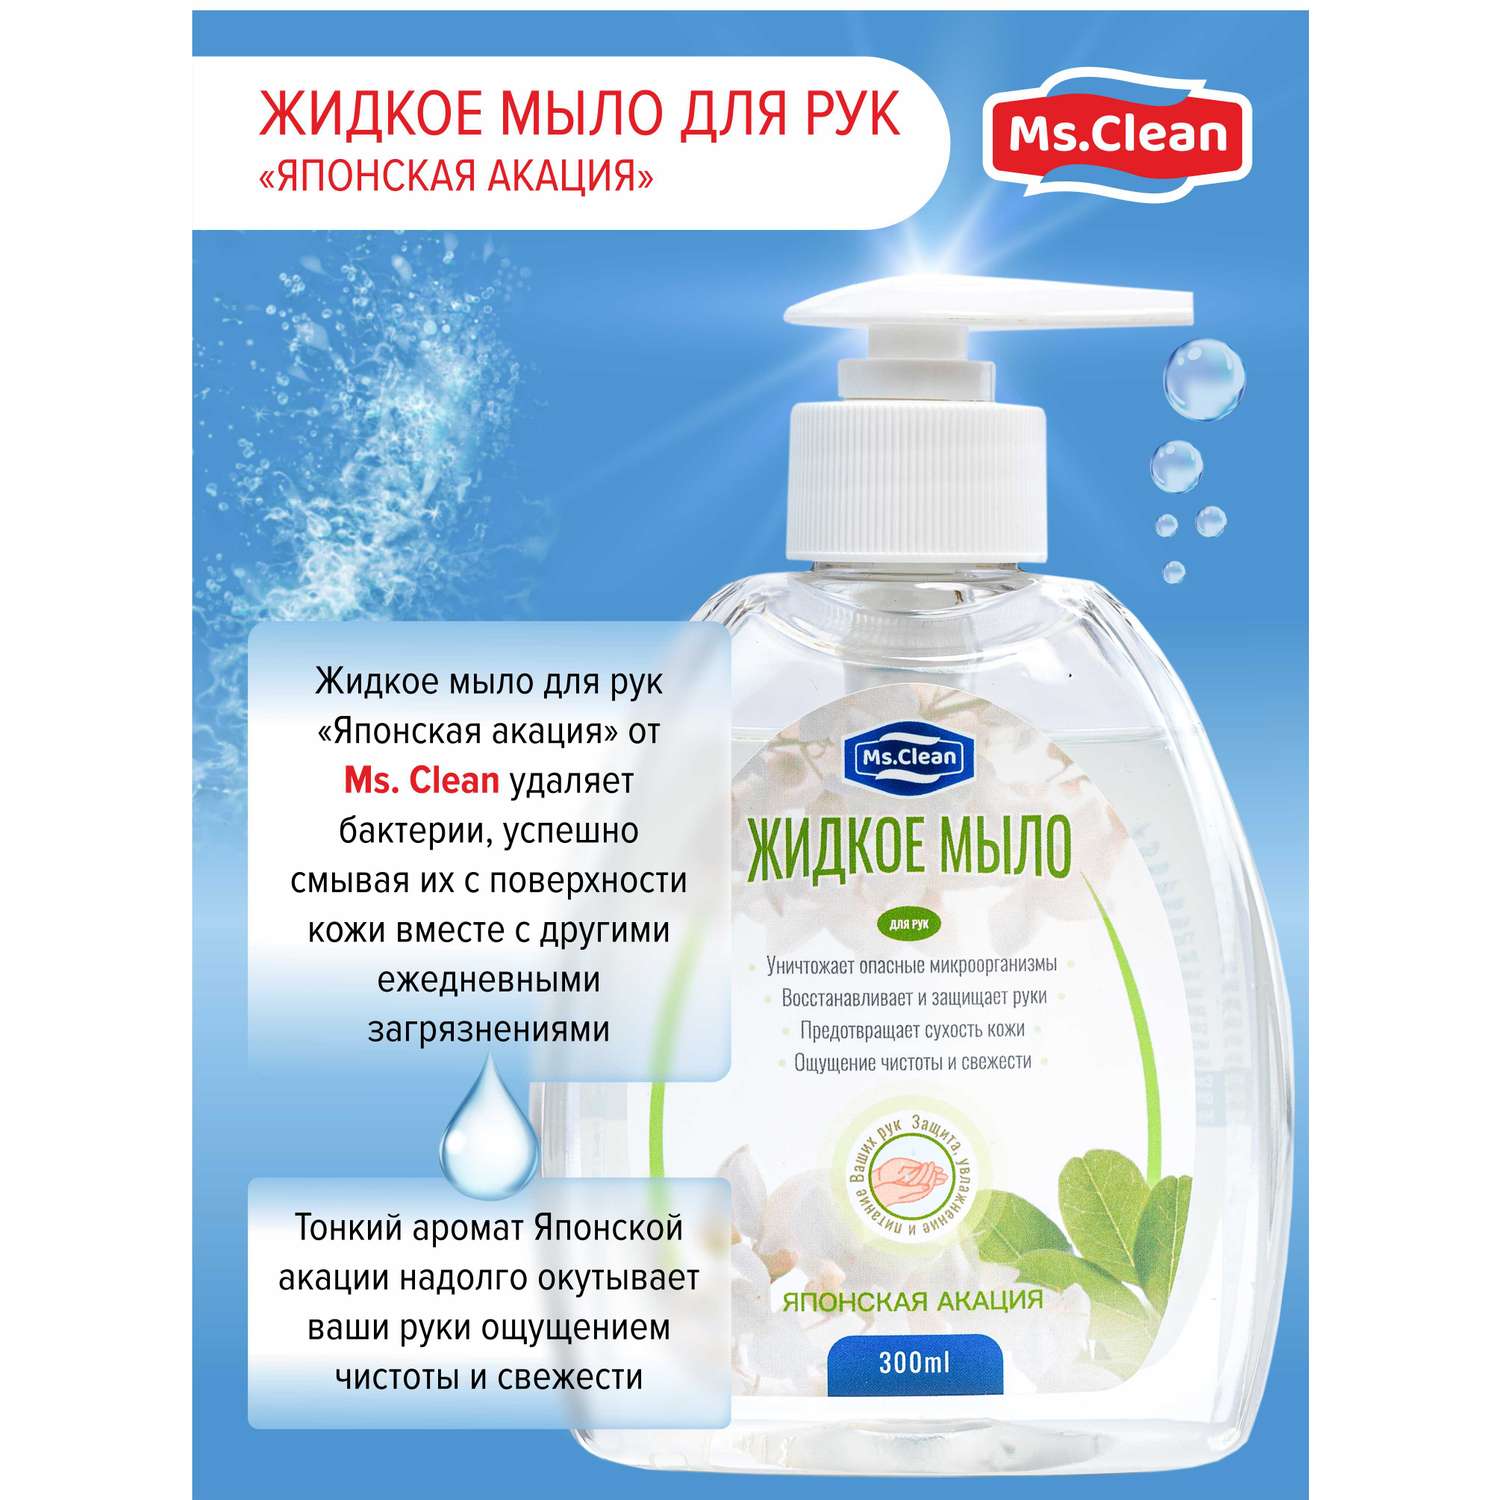 Жидкое мыло для рук Ms.Clean Японская акация 300 мл - фото 5